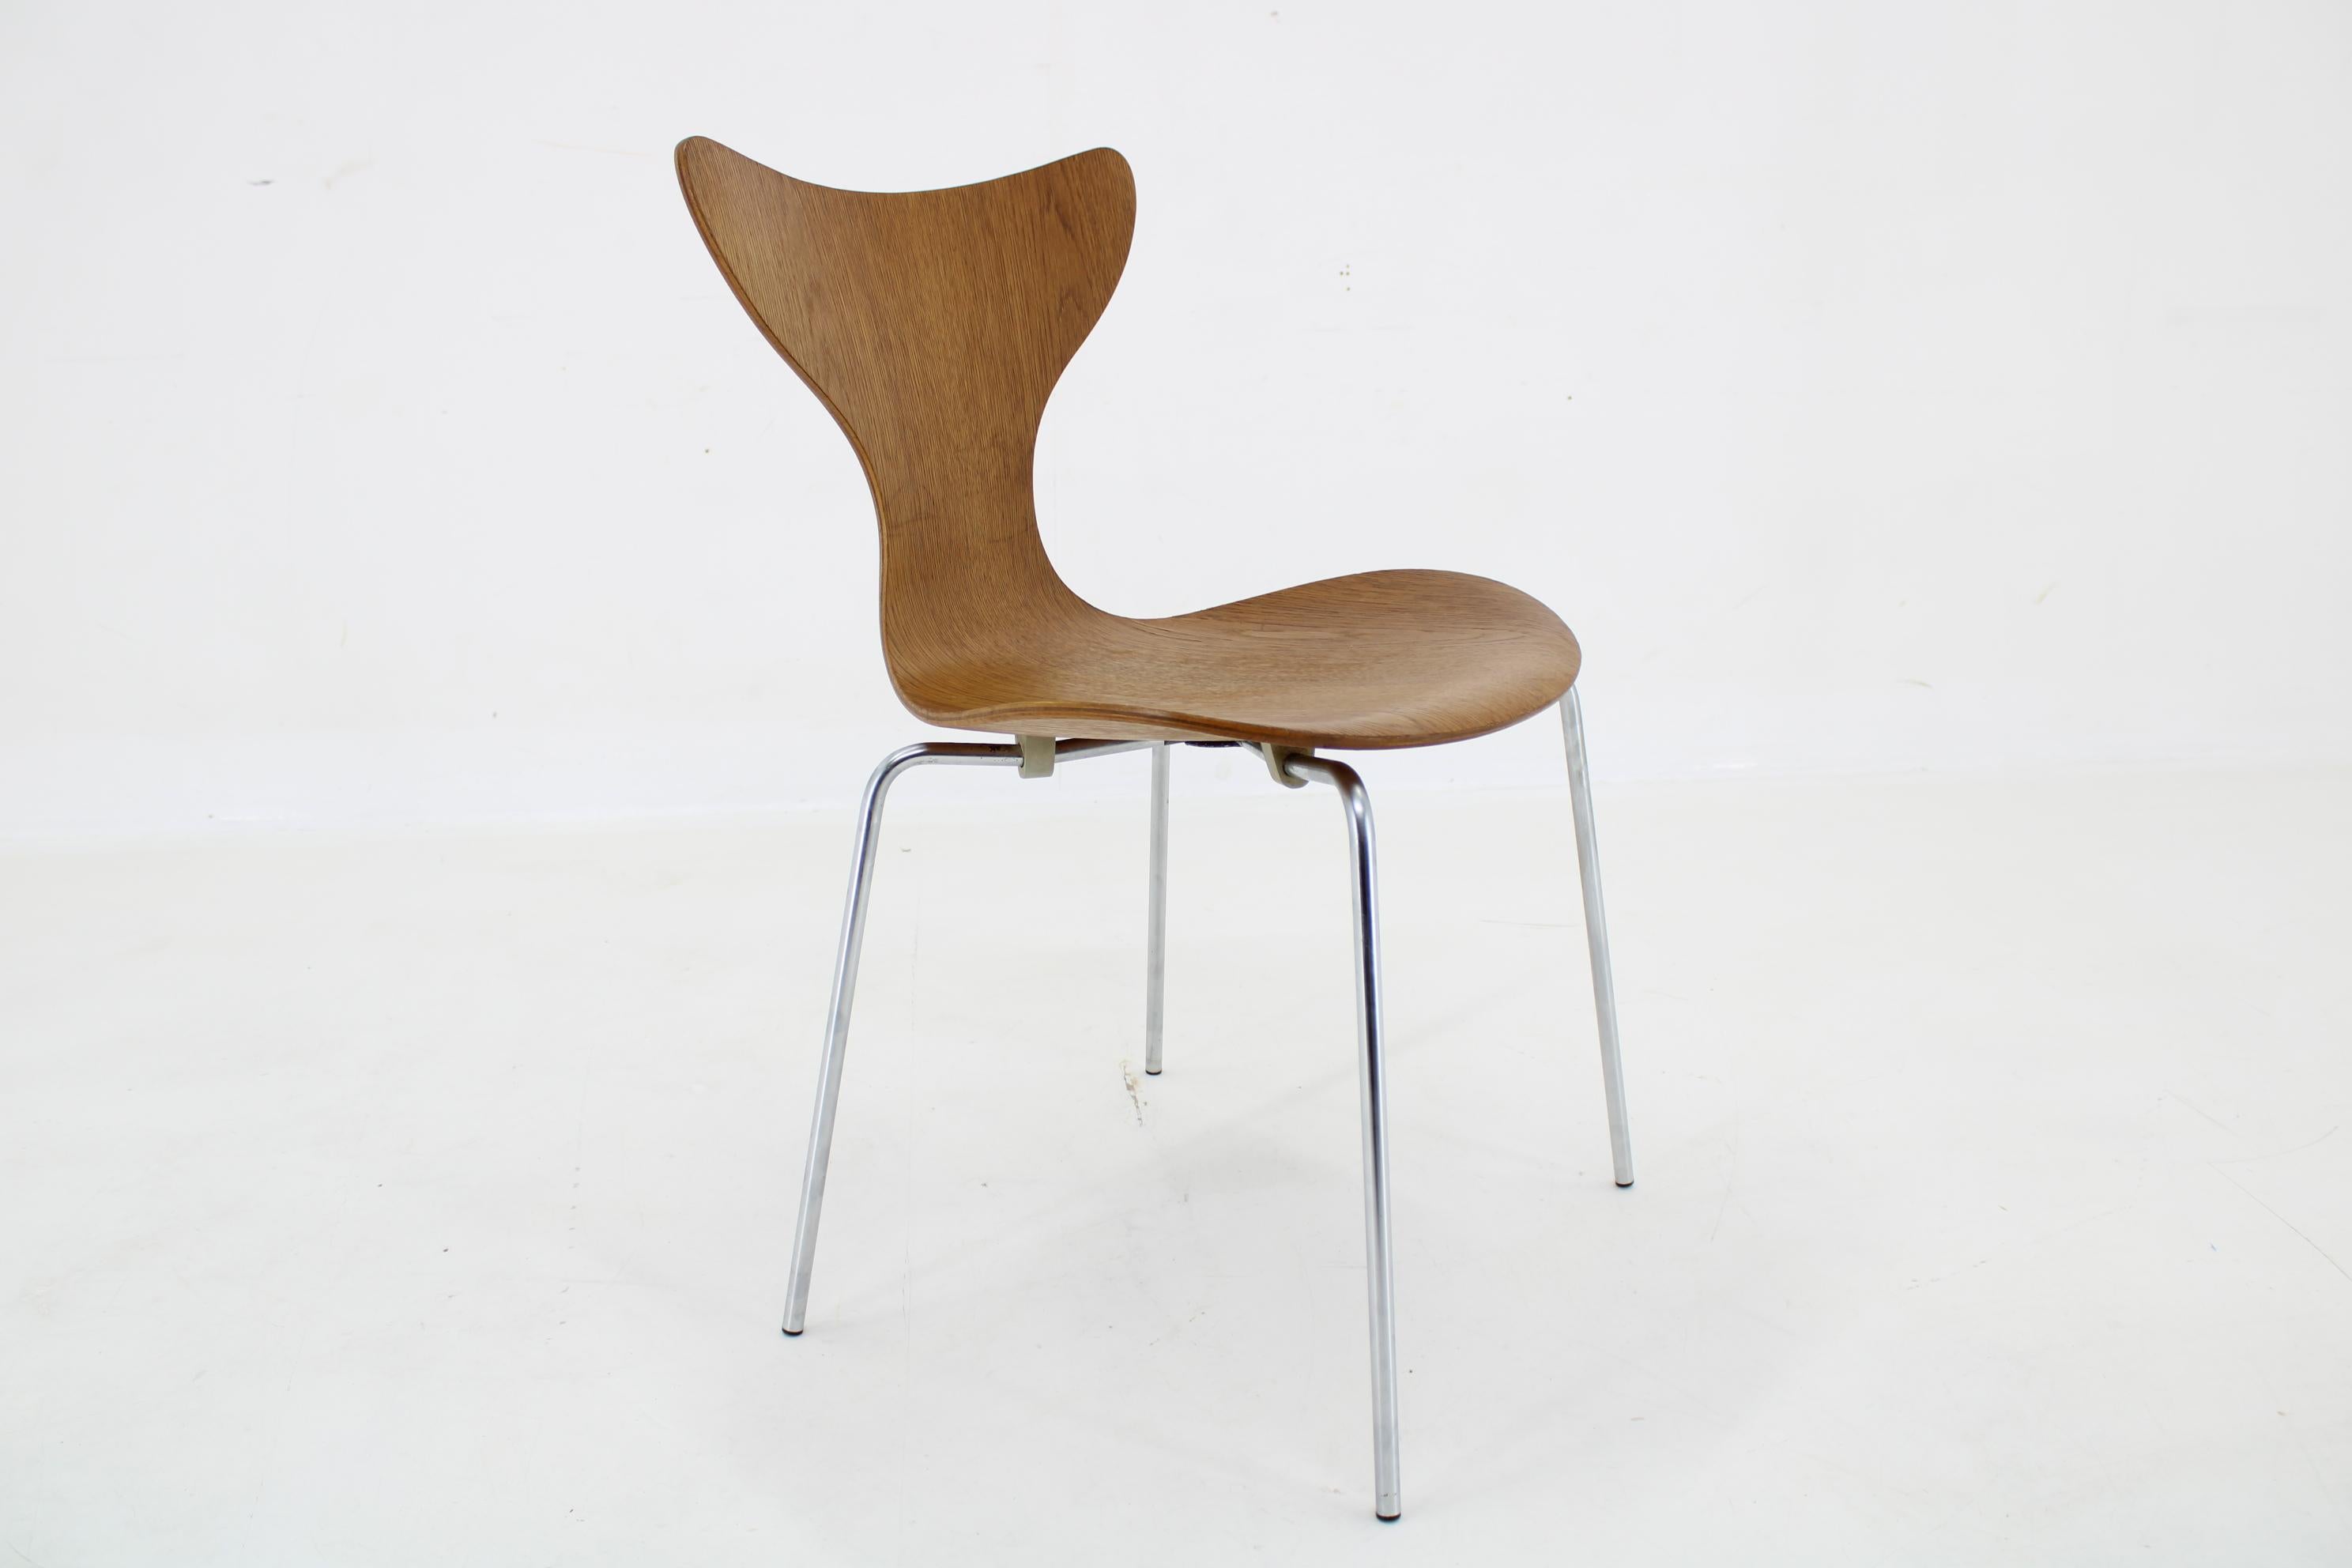 1970s Arne Jacobsen Set of Six Lily Chairs in Oak by Fritz Hansen, Denmark For Sale 2